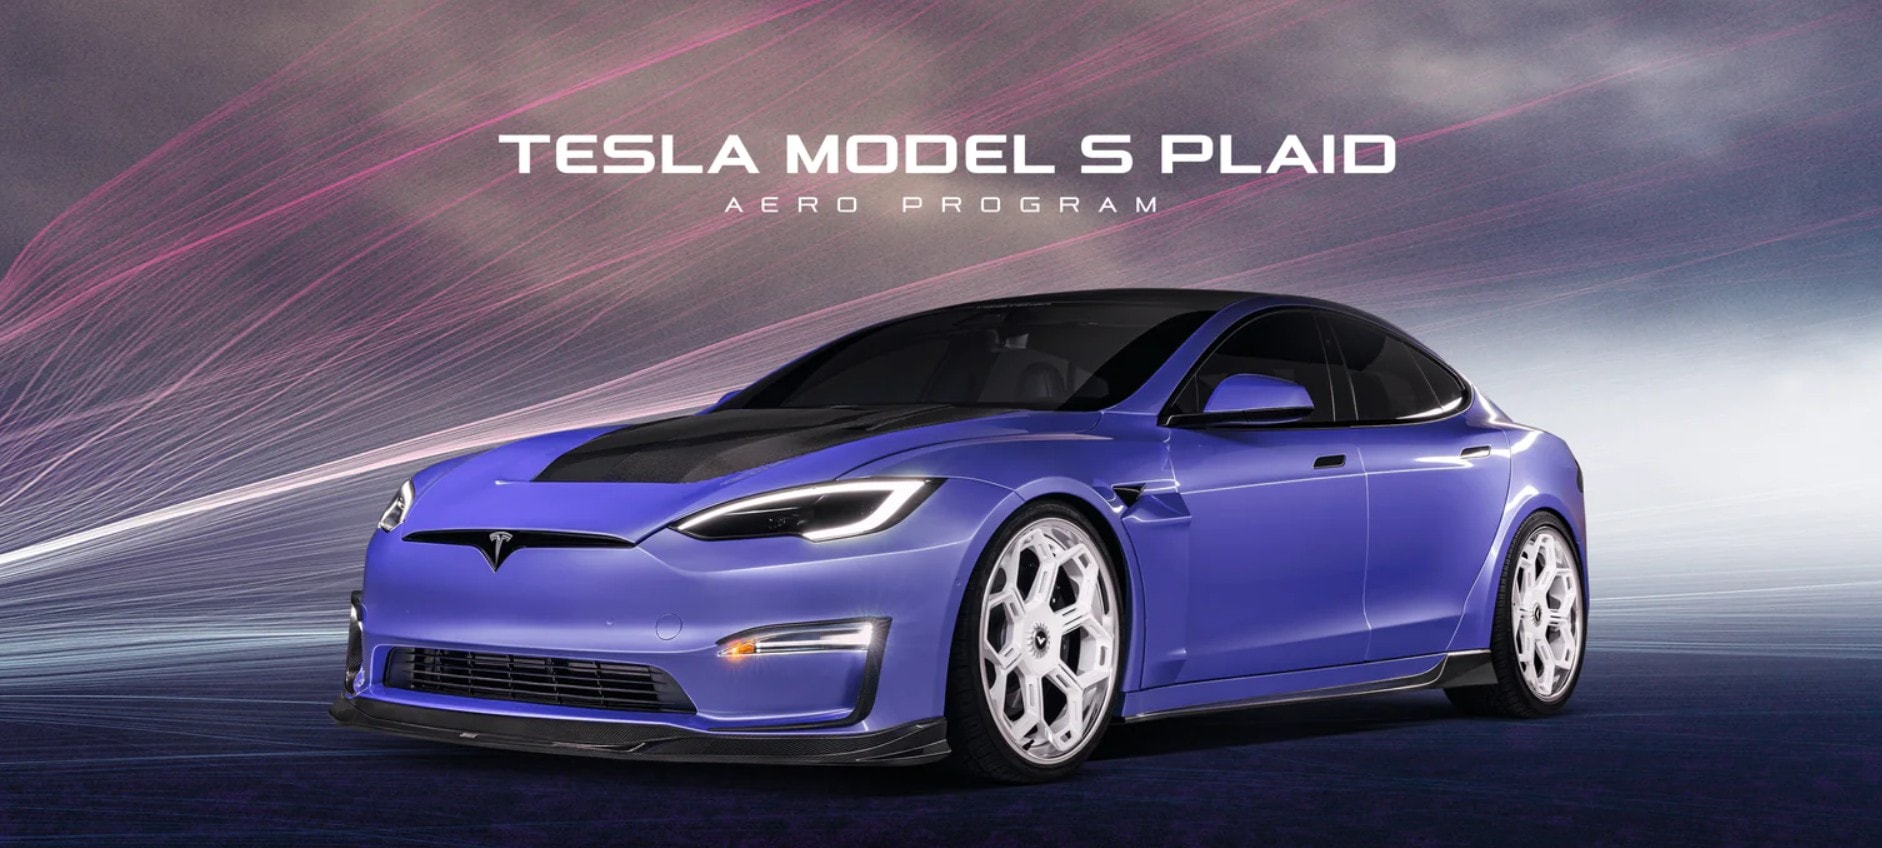 Vorsteiner's Tesla Model S Plaid Carbon Fiber Aero Program Doesn't